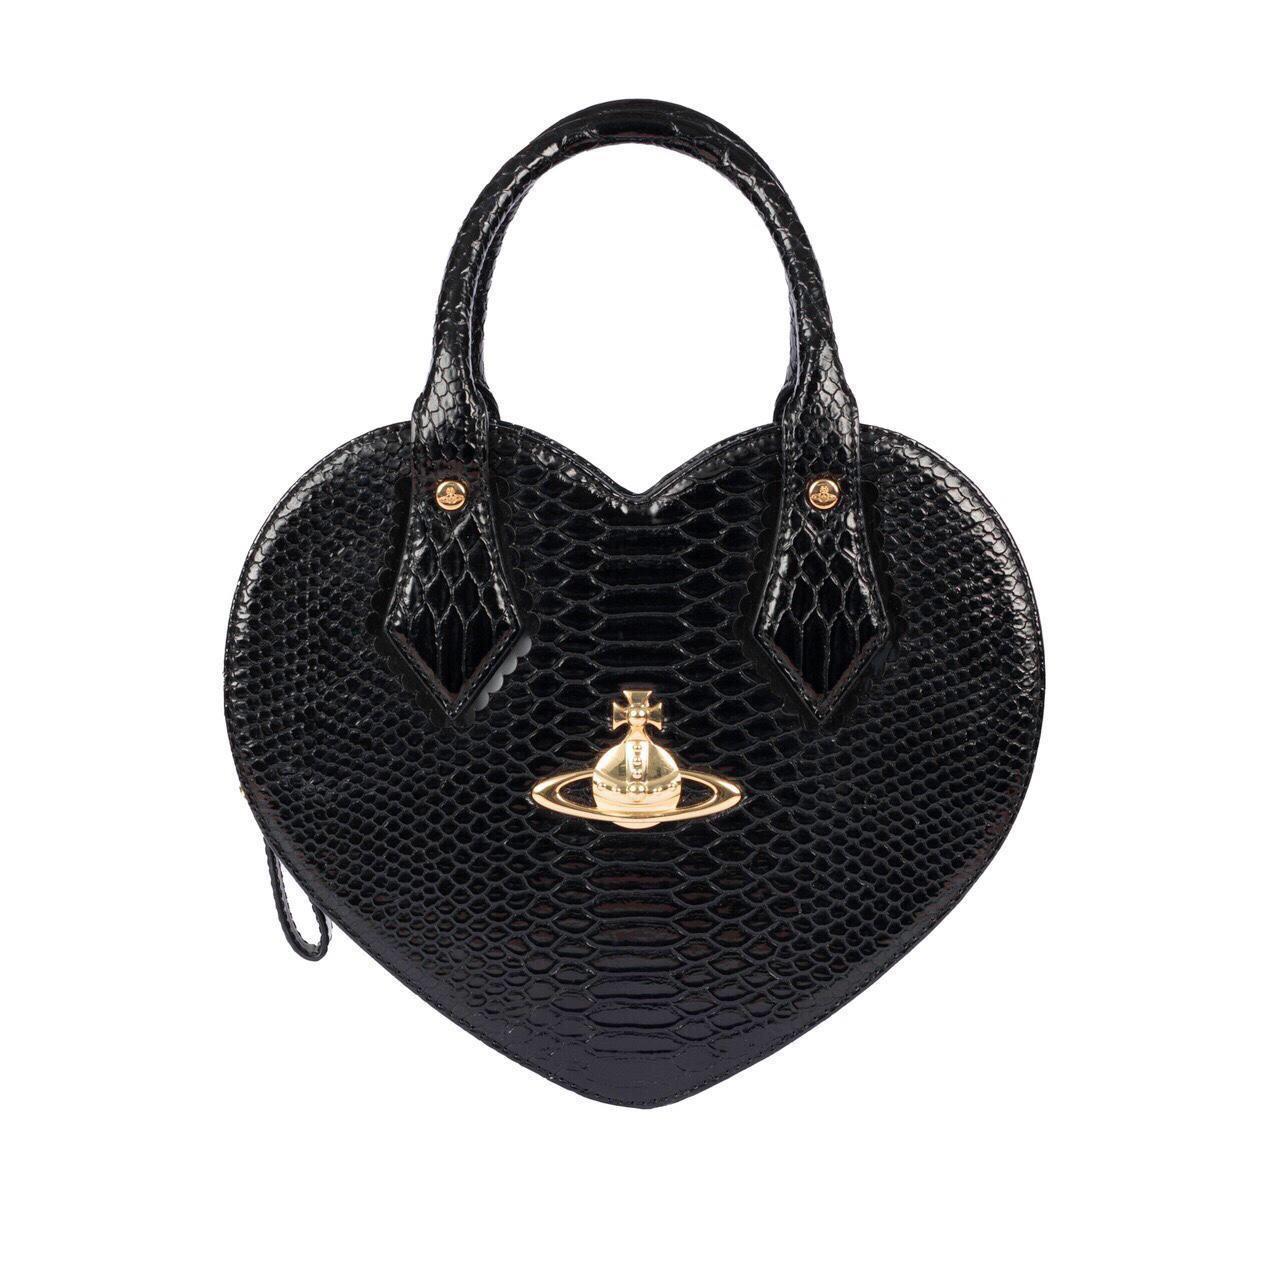 Vivienne Westwood Heart Bag Chancery Black with... - Depop